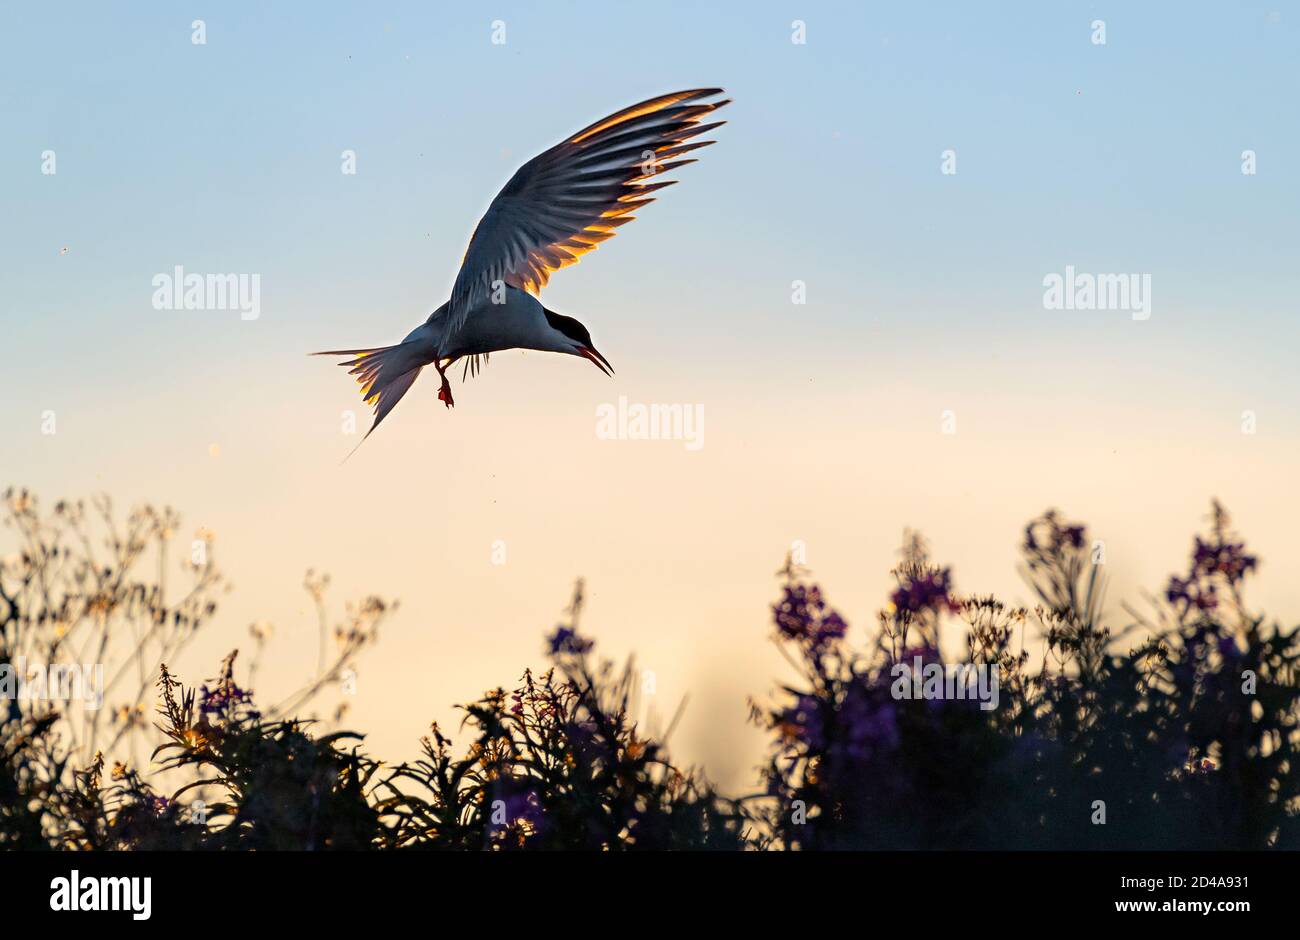 Silhouette of flying common tern. Flying common tern on the sunset sky background. Back sunlight. Scientific name: Sterna hirundo. Stock Photo